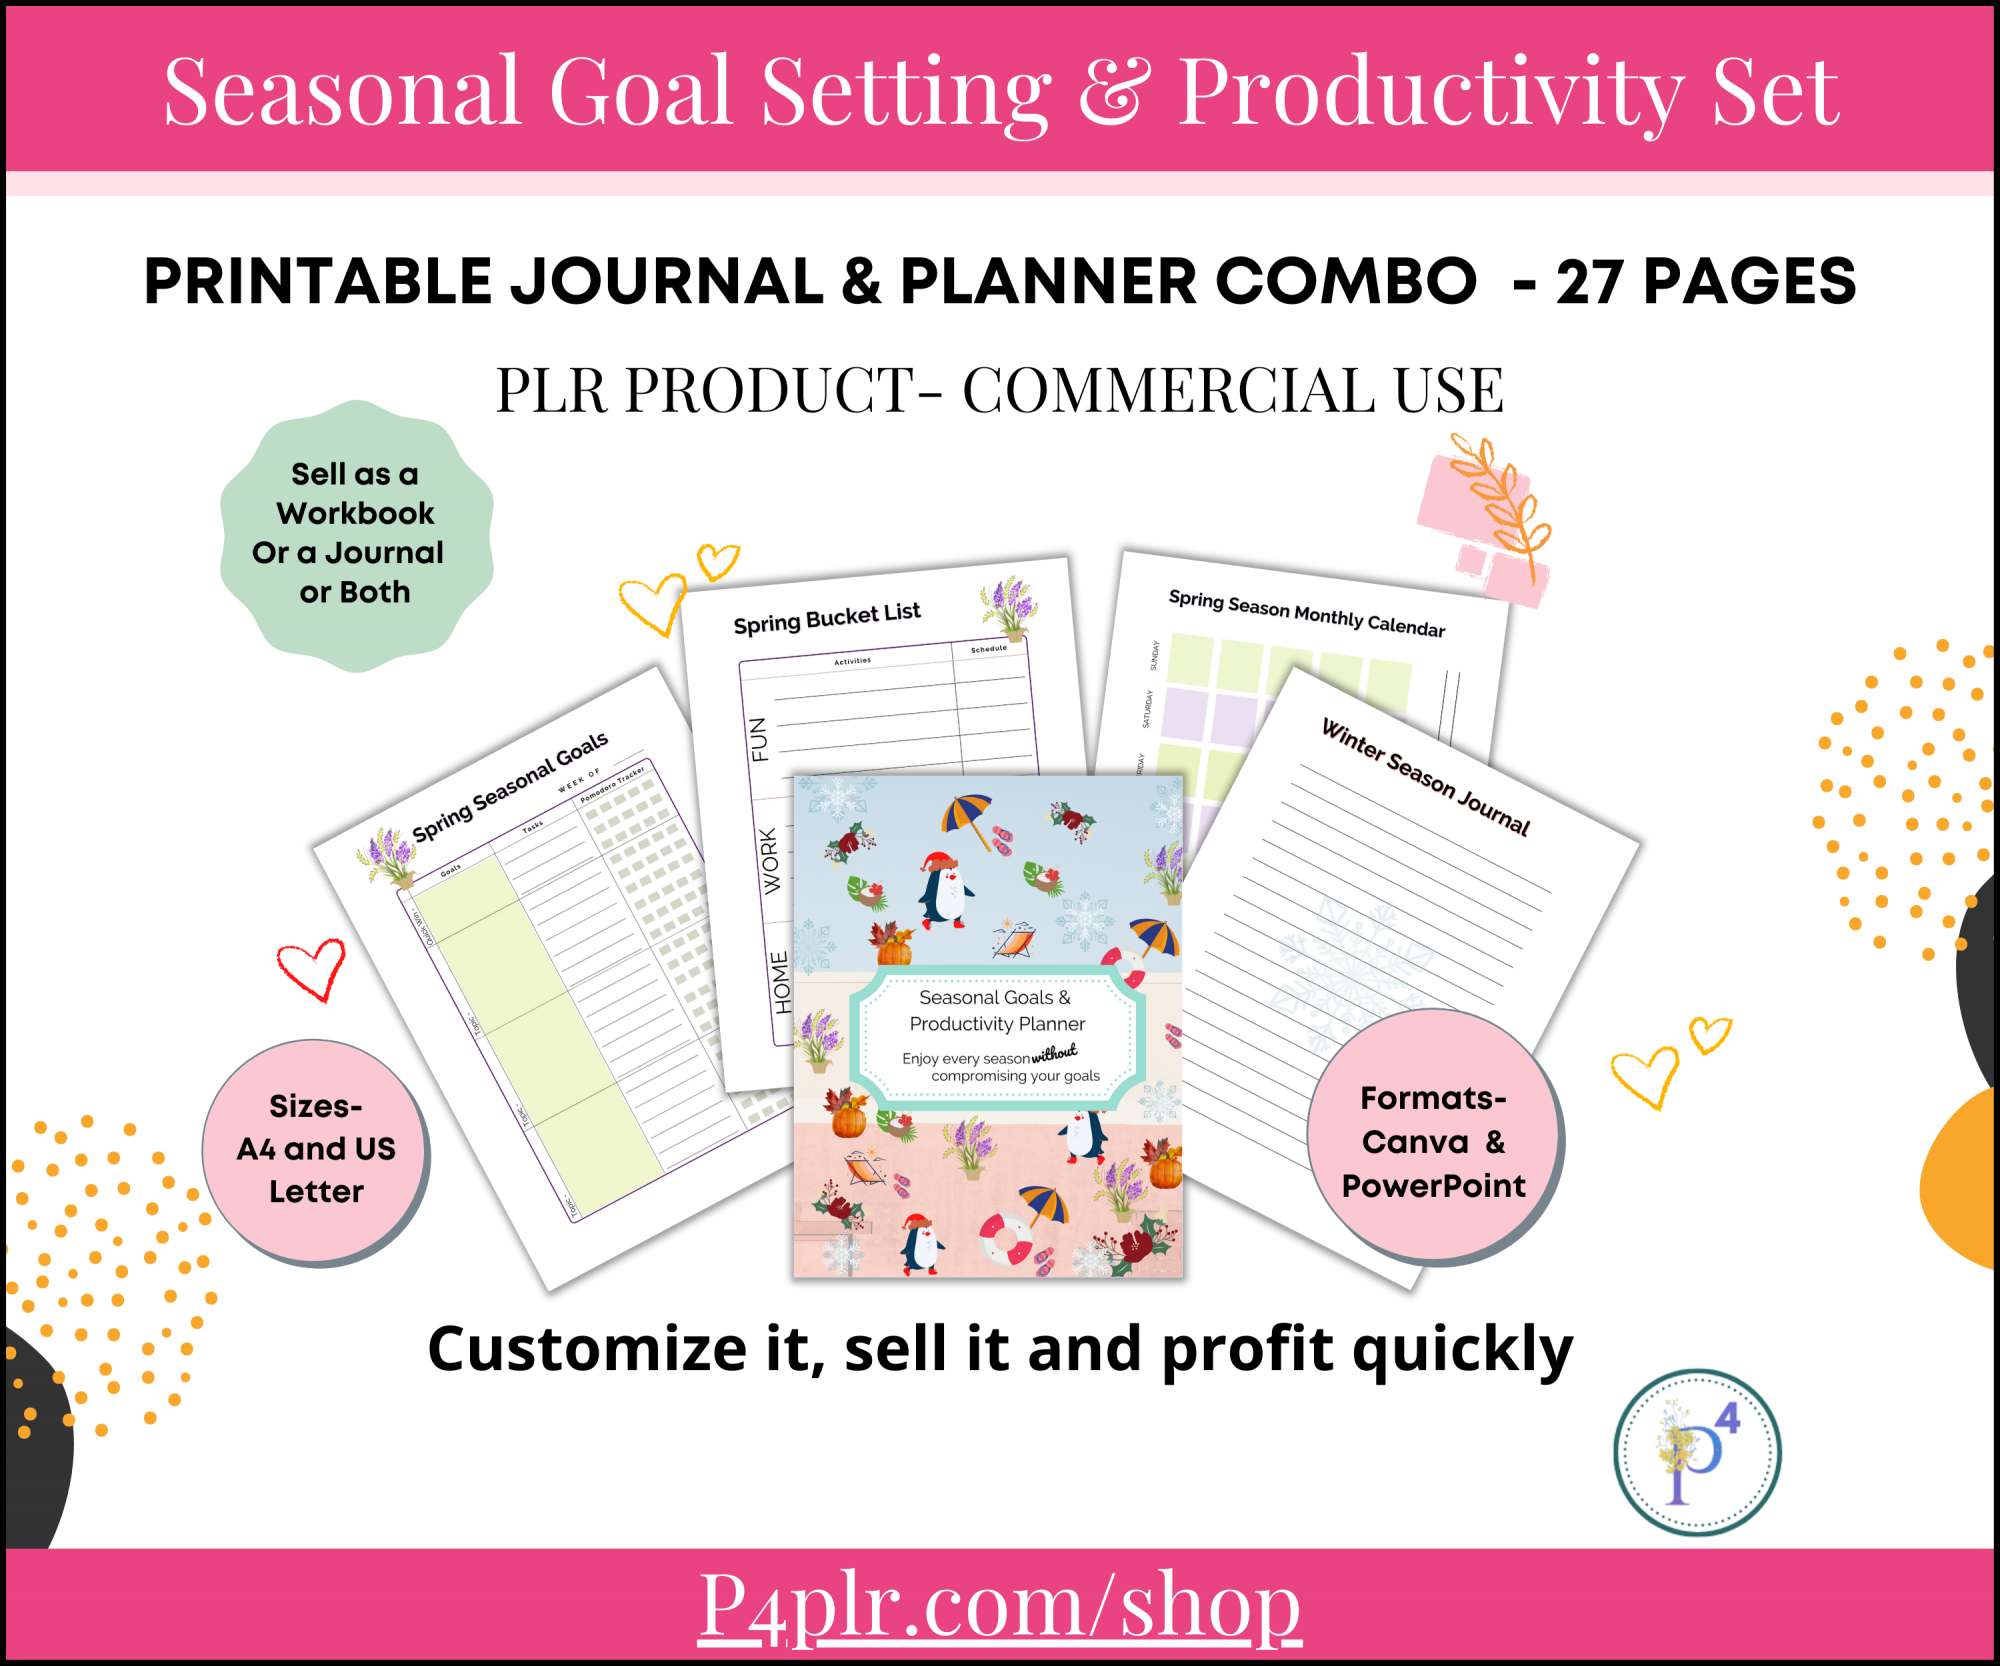 Seasonal Goal Setting & Productivity Set